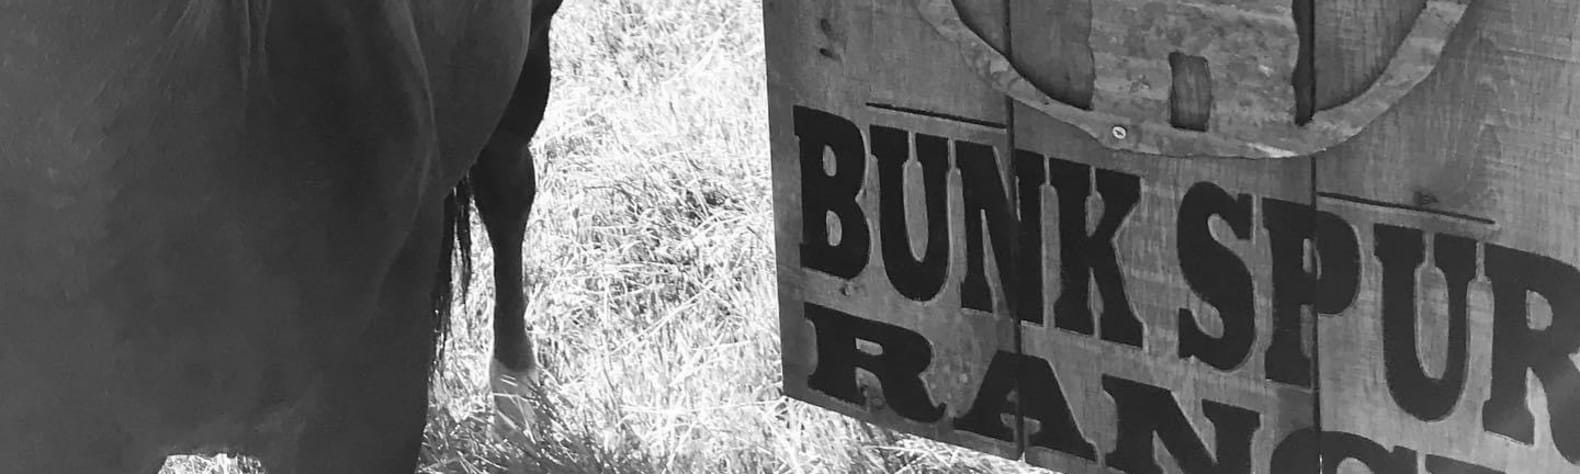 Bunk Spur Ranch